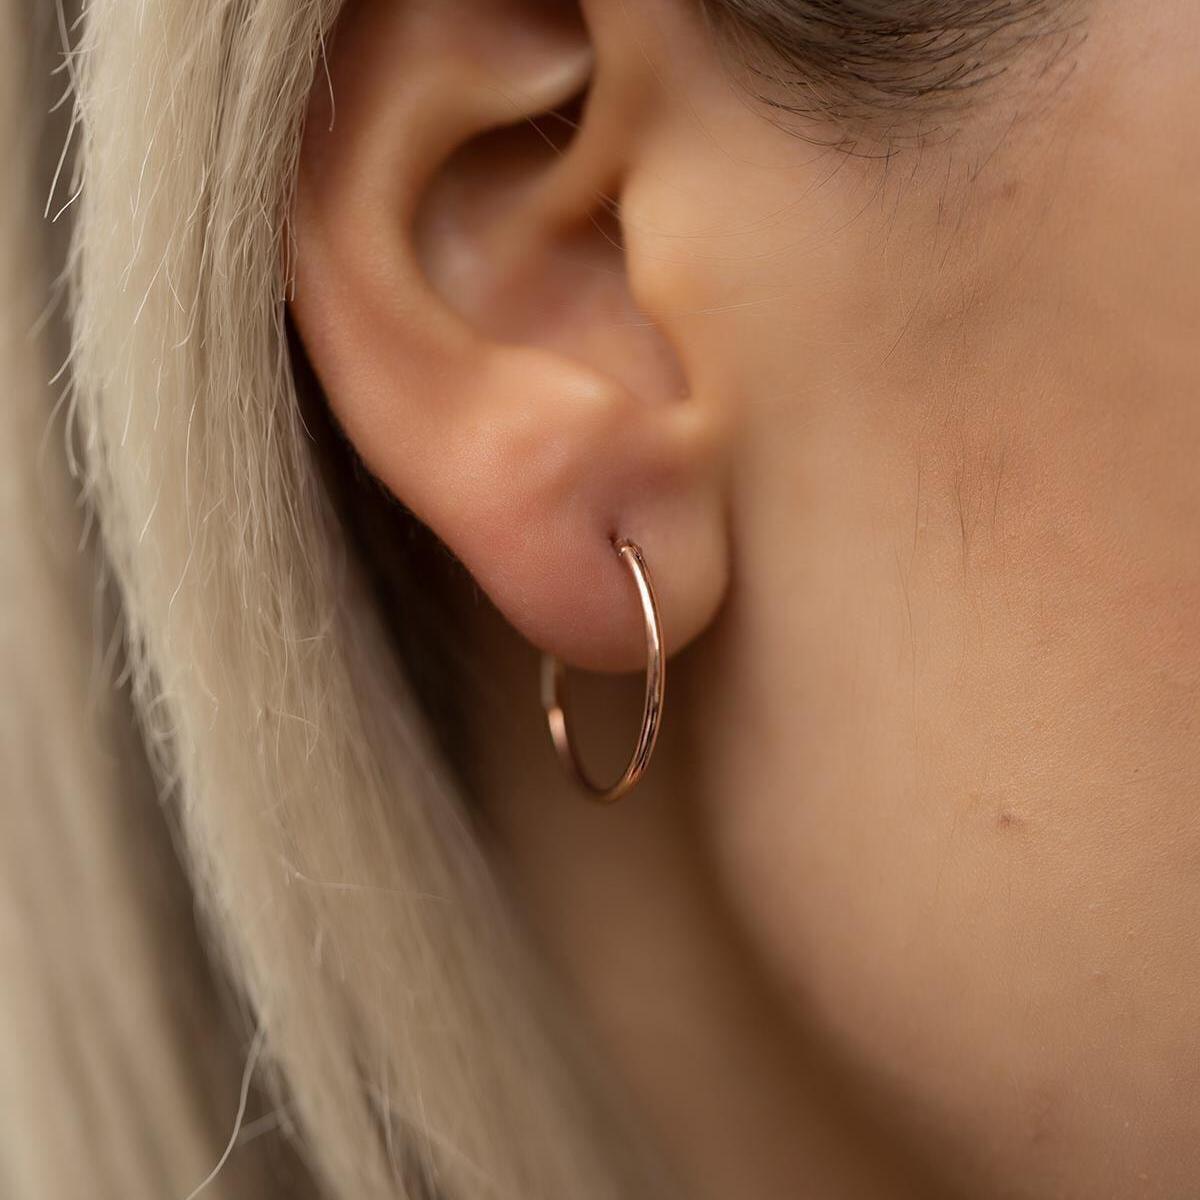 Tiny Hoop Earrings • Small Hoop Rose Gold Earrings • Gift For Her - Trending Silver Gifts